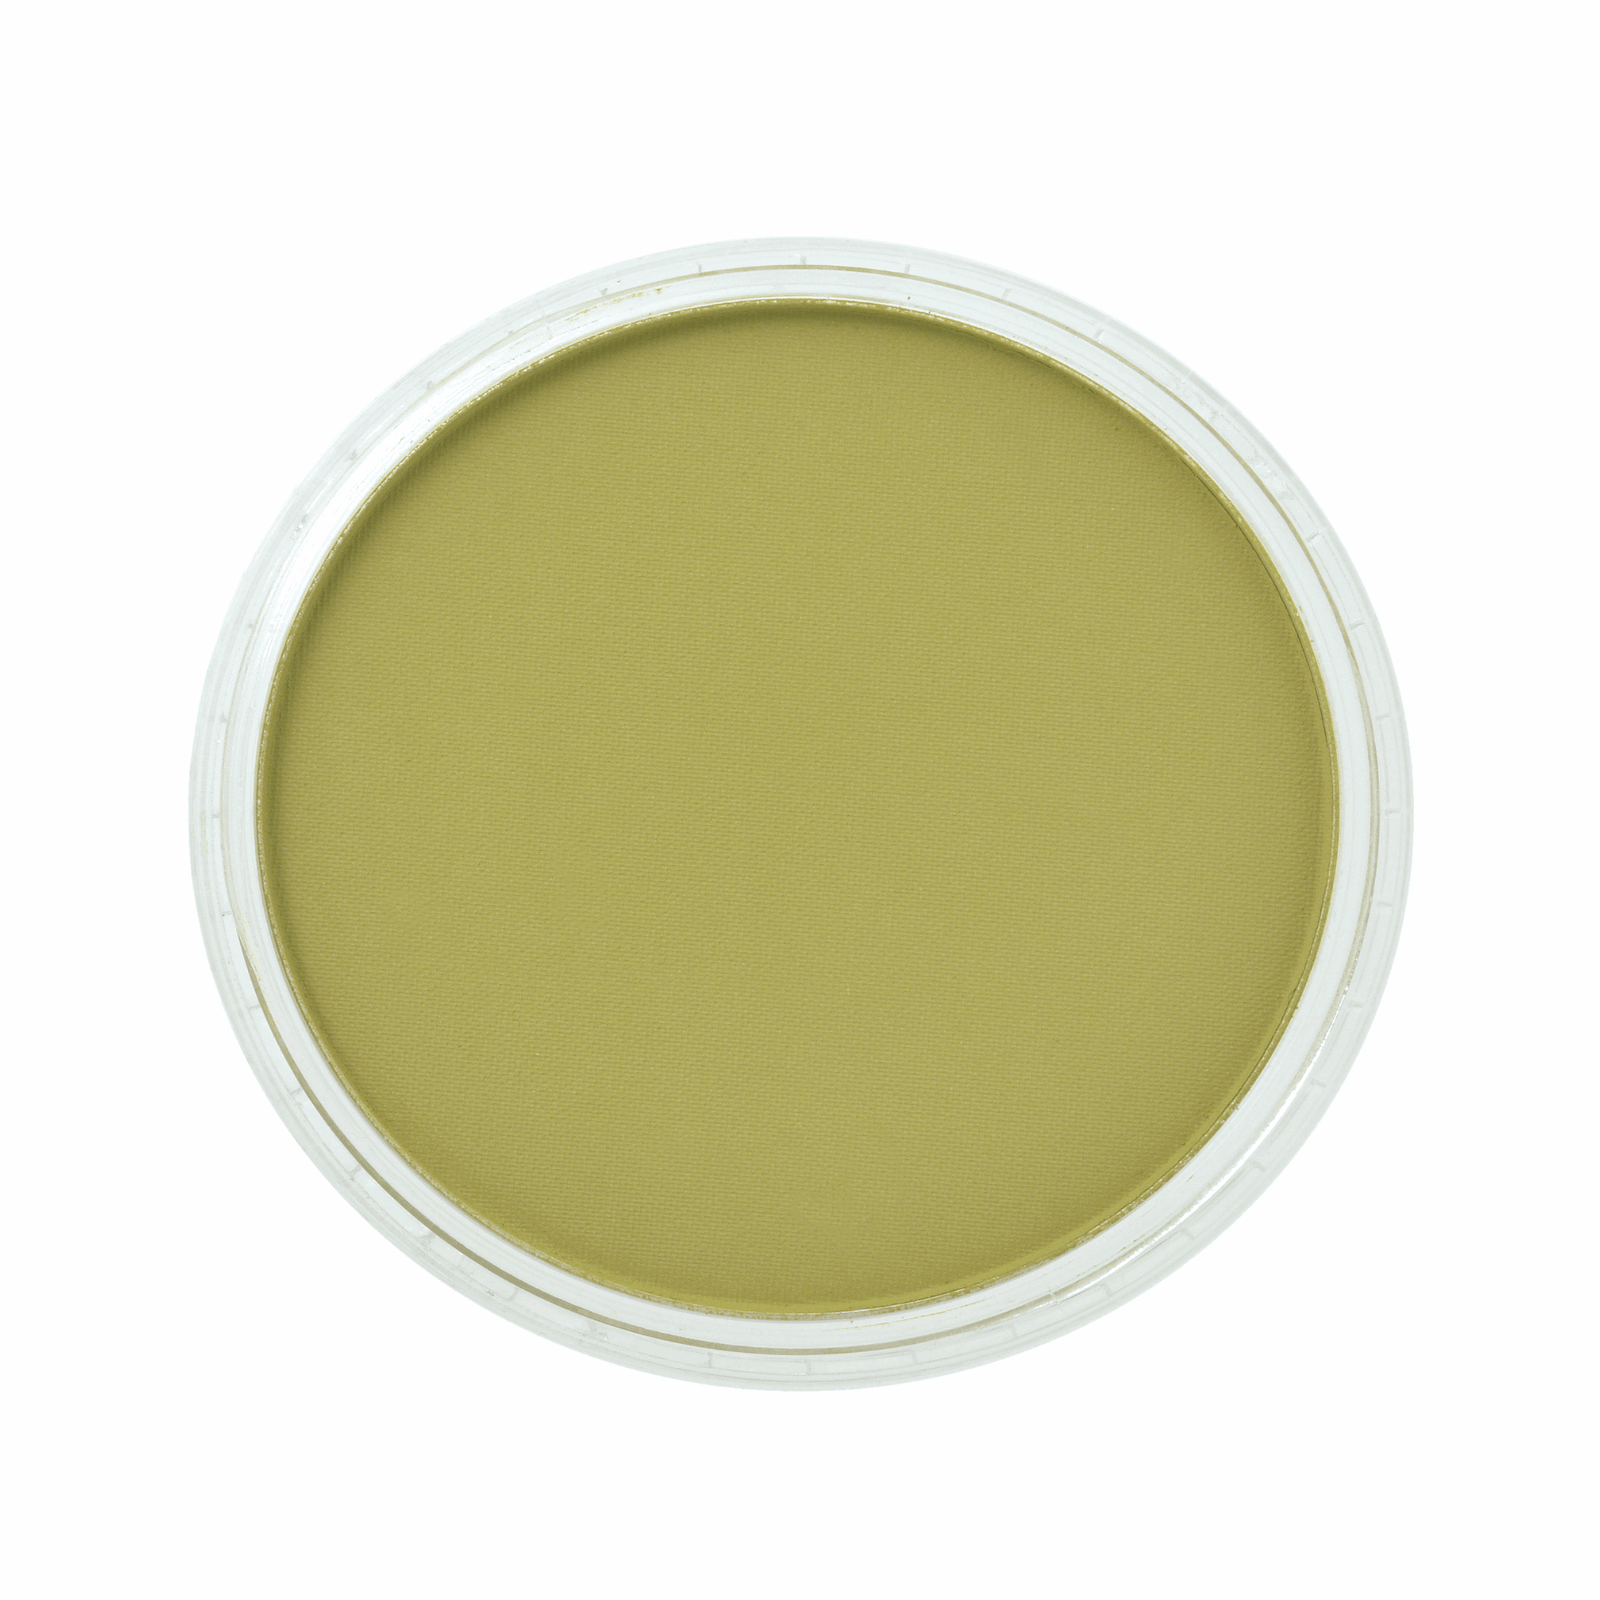 Panpastel Tørpastel 9ml Bright Yellow Green Shade 680.3